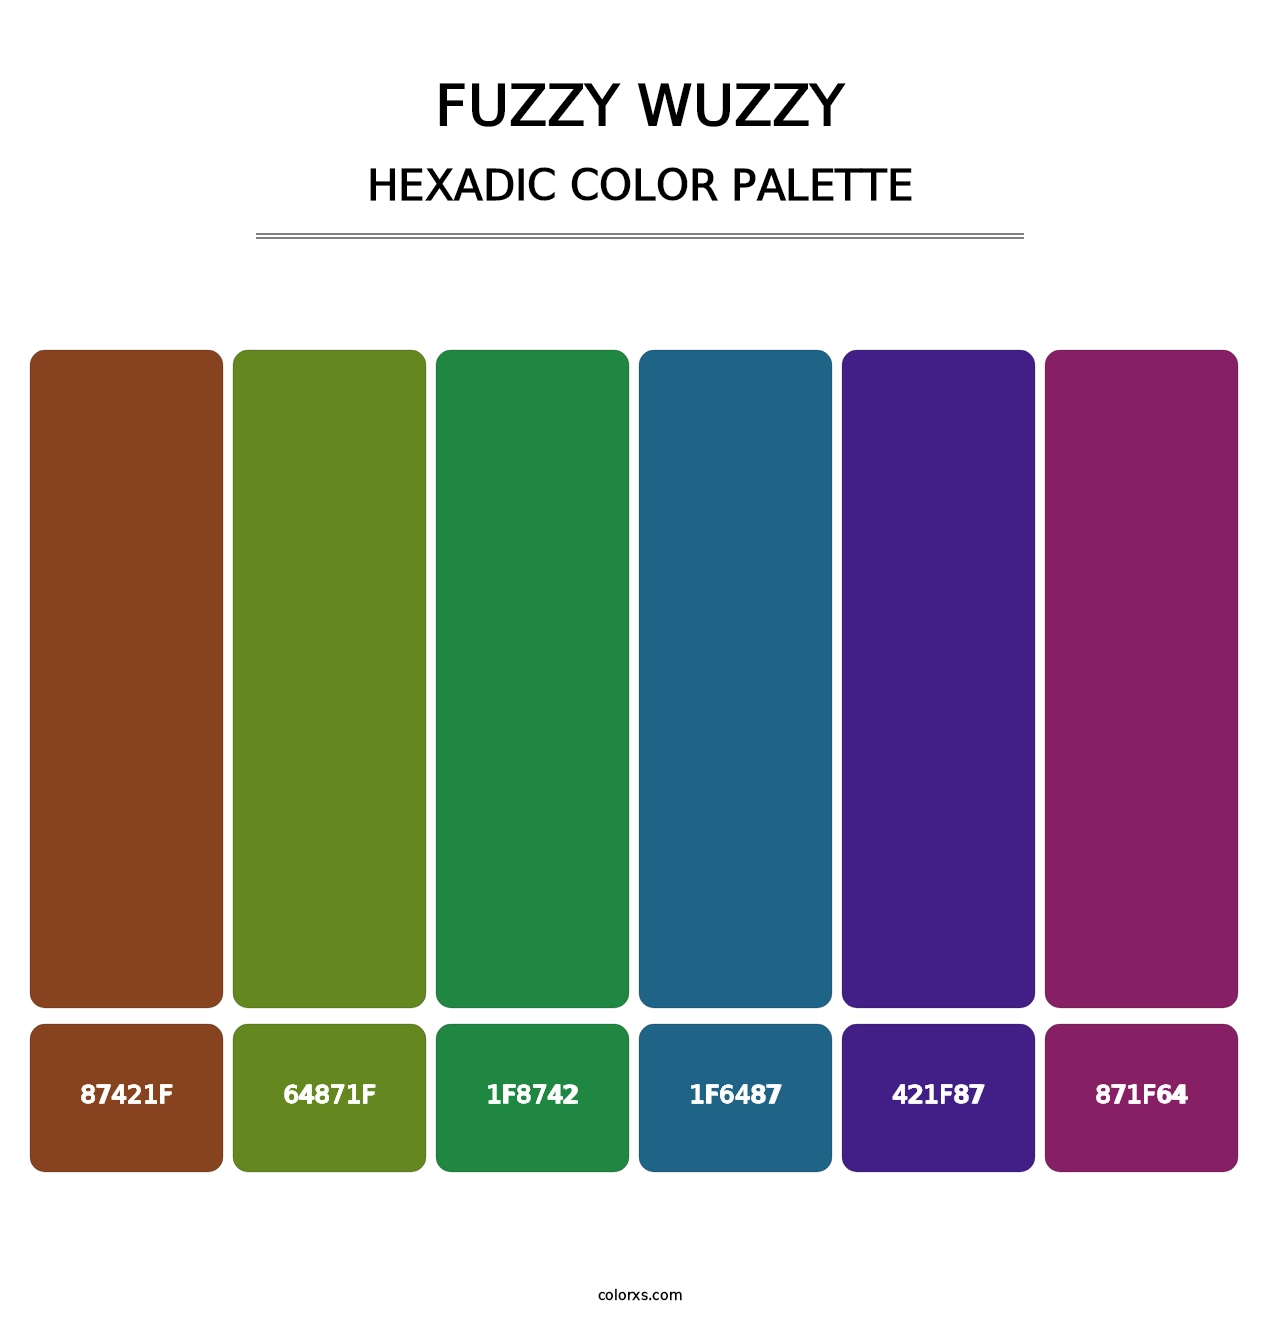 Fuzzy Wuzzy - Hexadic Color Palette